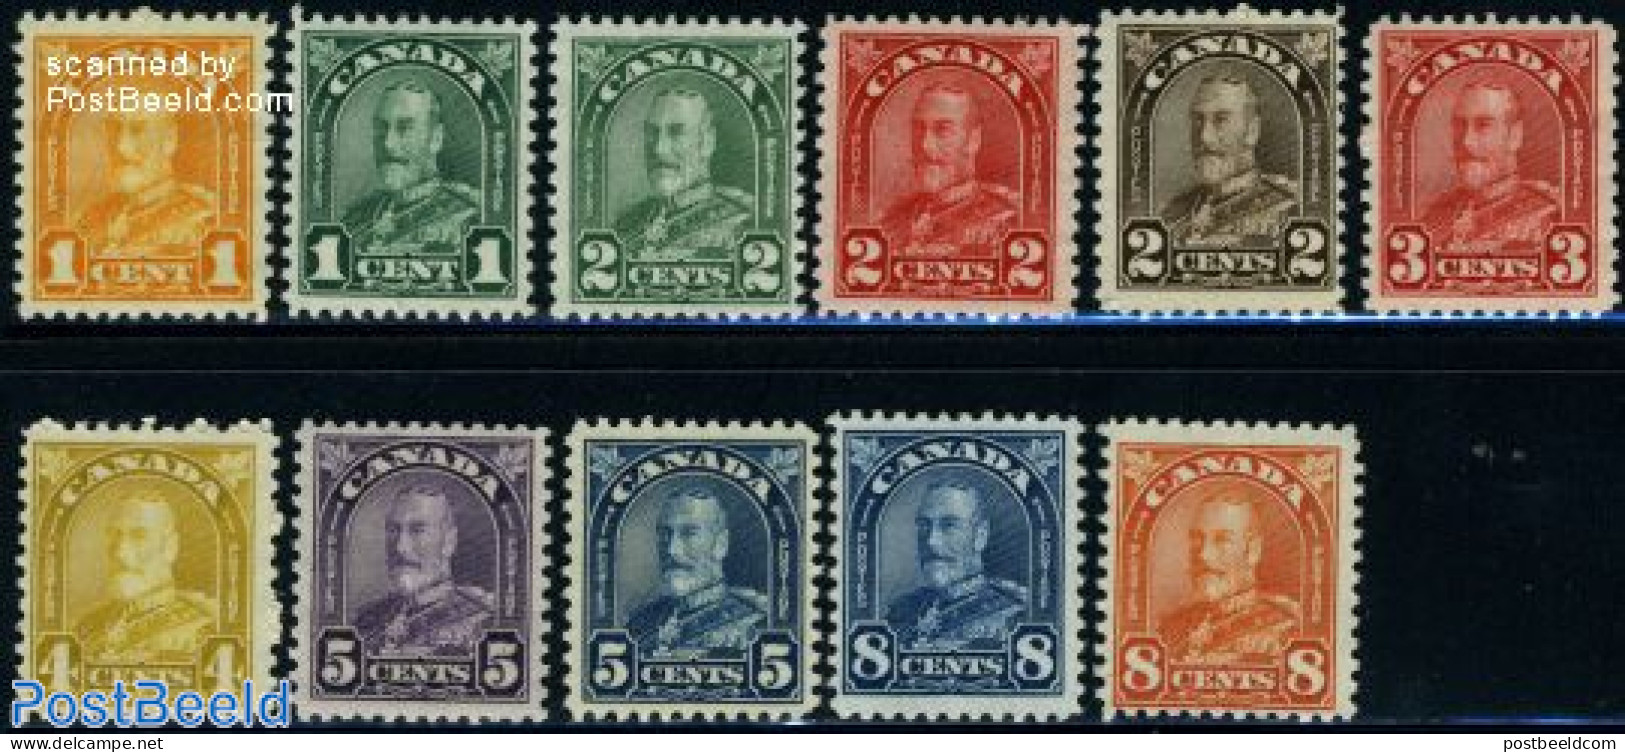 Canada 1930 Definitives 11v, Mint NH - Ongebruikt